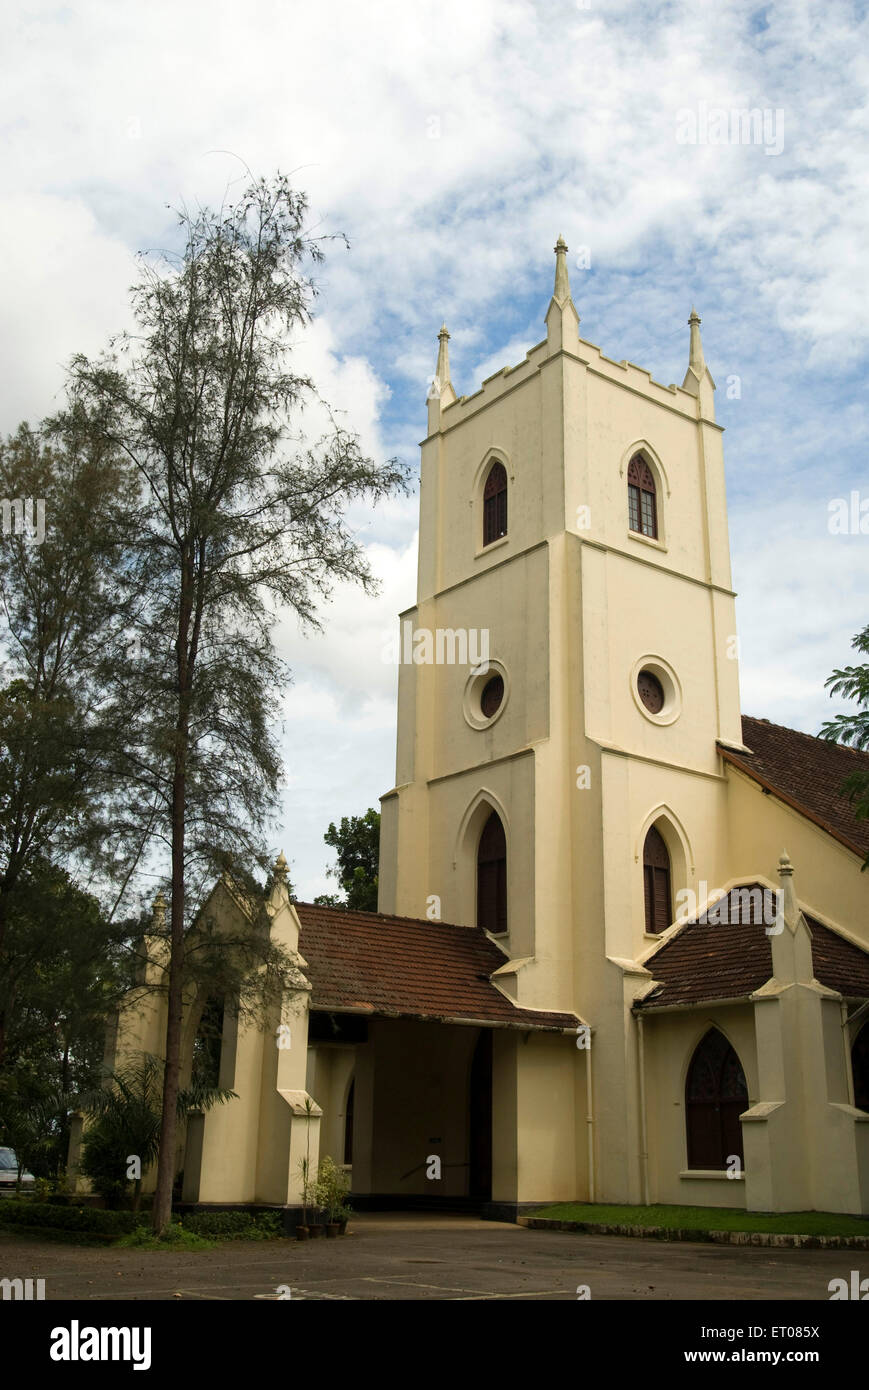 Santísima Trinidad Catedral de CSI, Catedral de Santa Trinidad de CSI, Iglesia de la Catedral de CSI, Kottayam, Kerala, India, Asia Foto de stock